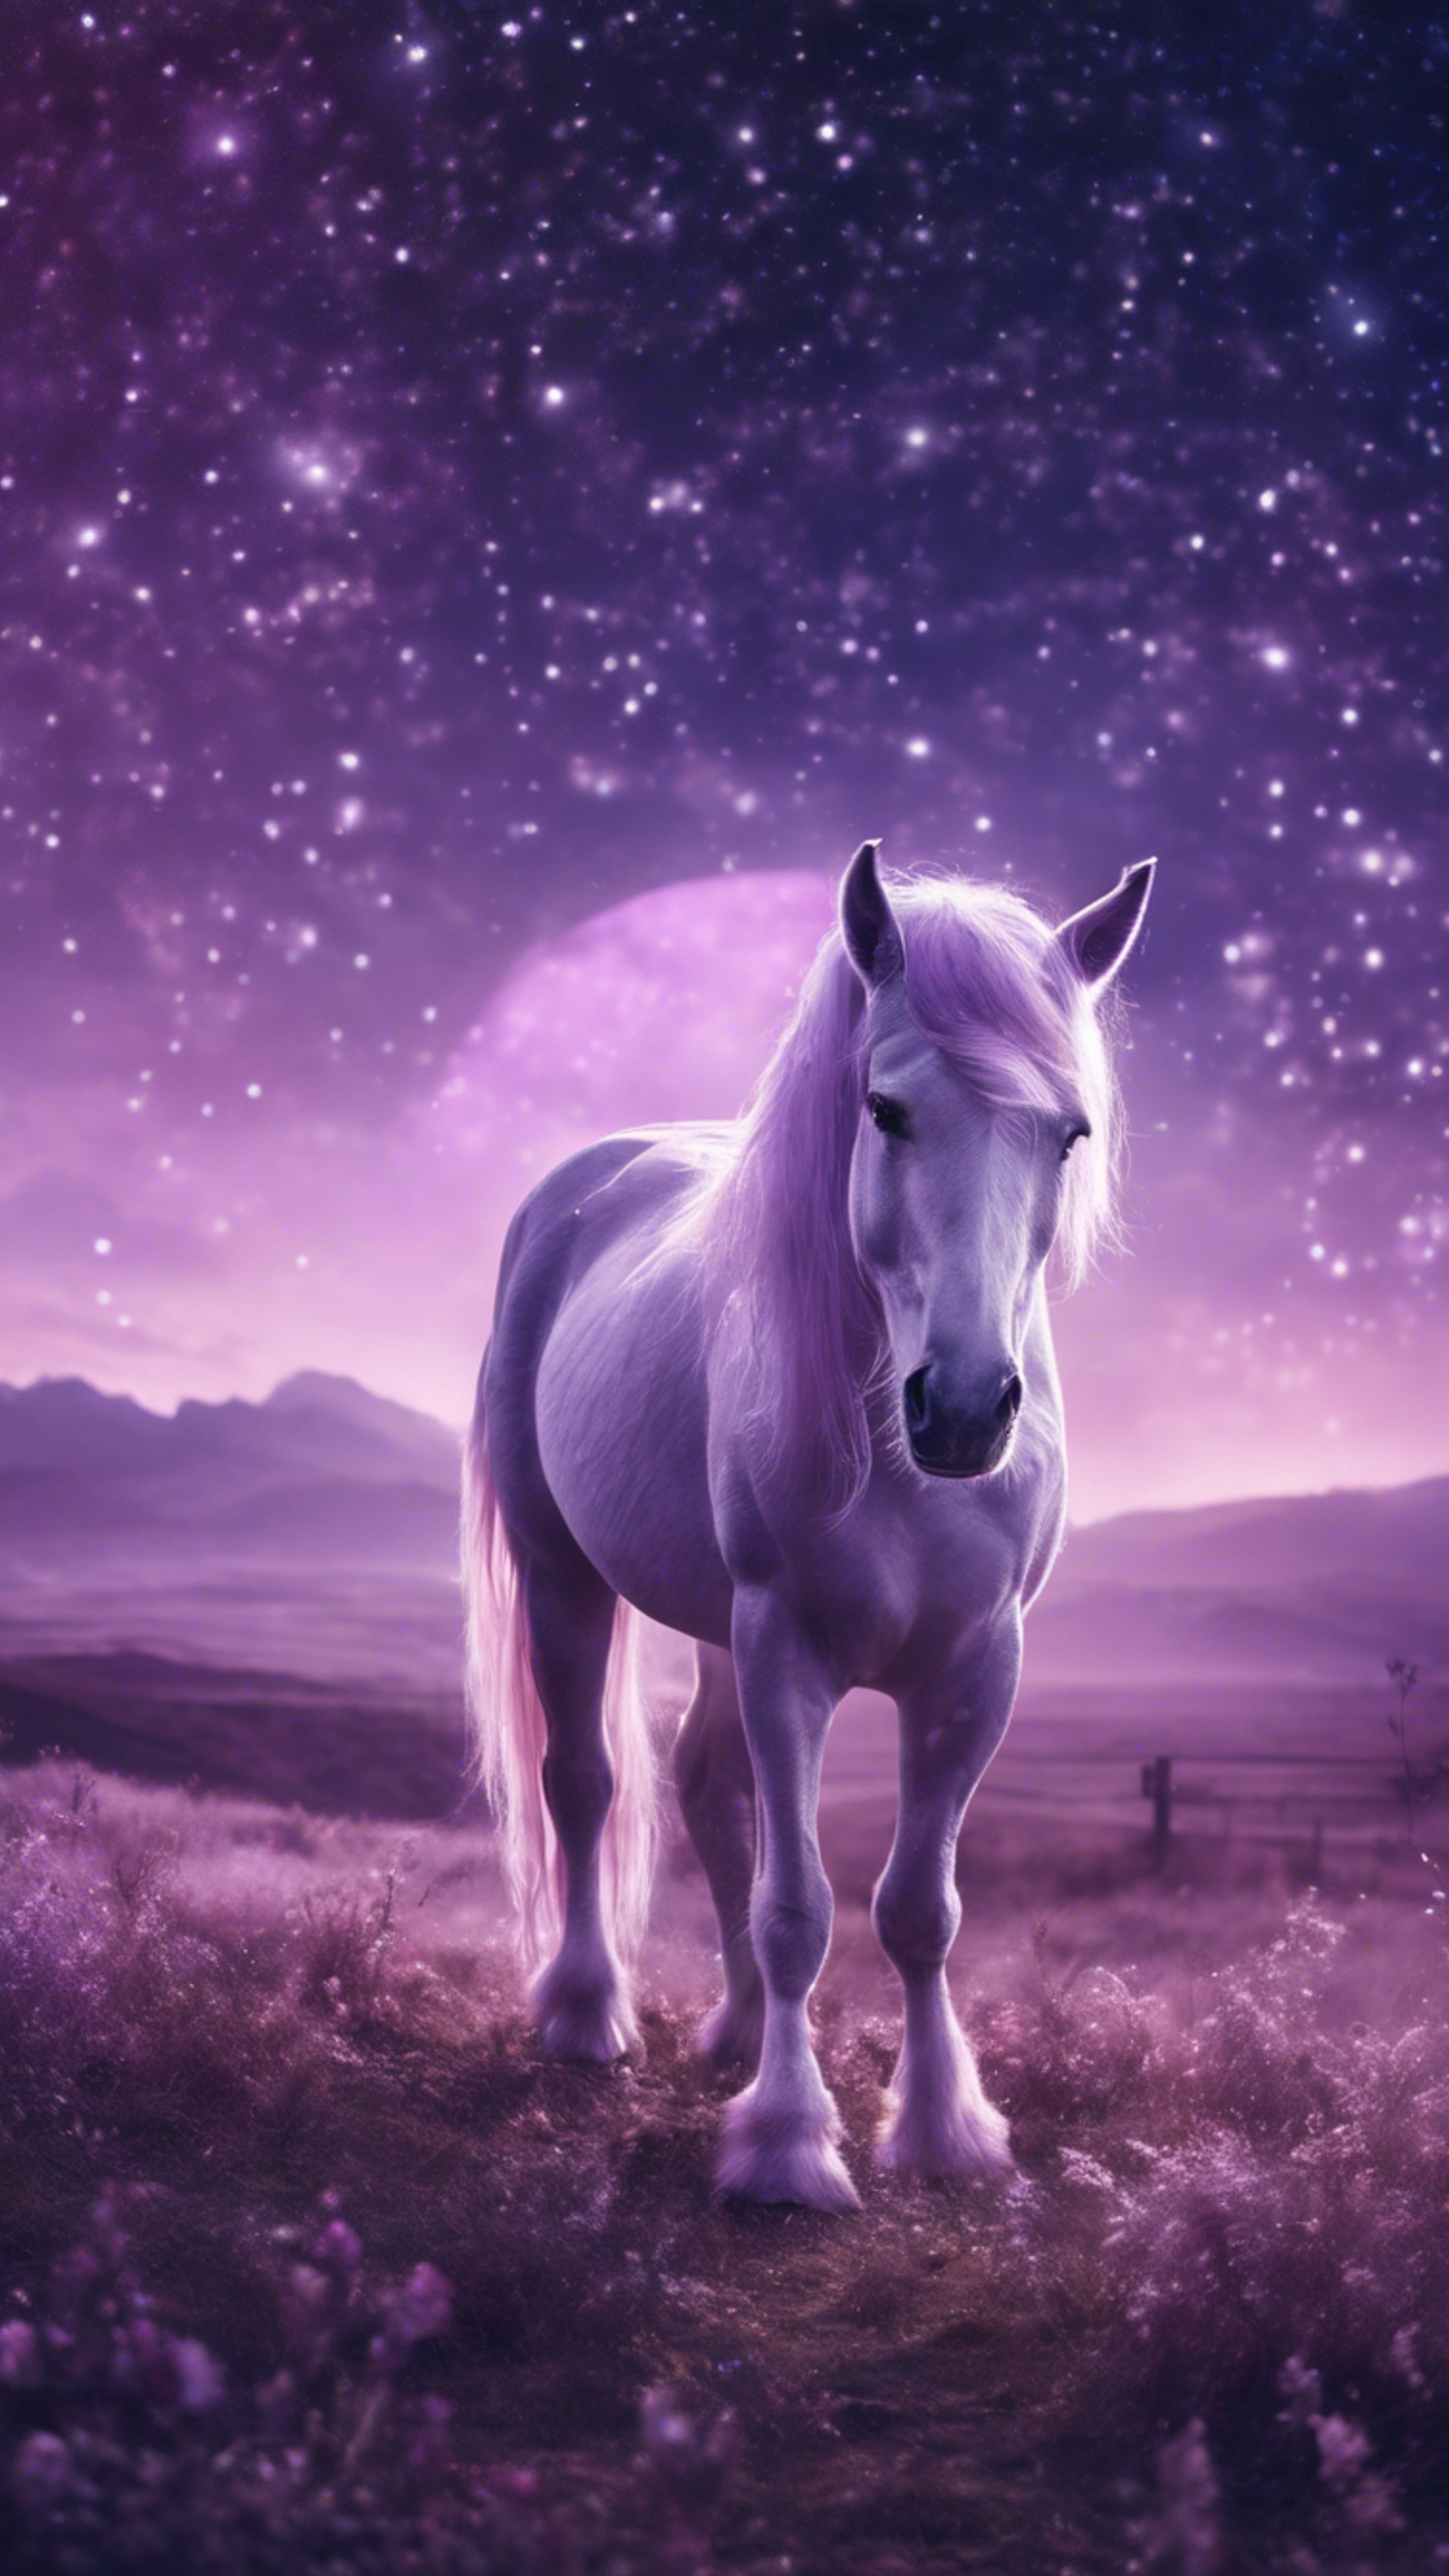 A light purple unicorn grazing in a mystical landscape under the starry night.壁紙[ebdebf087ad14a189ba8]